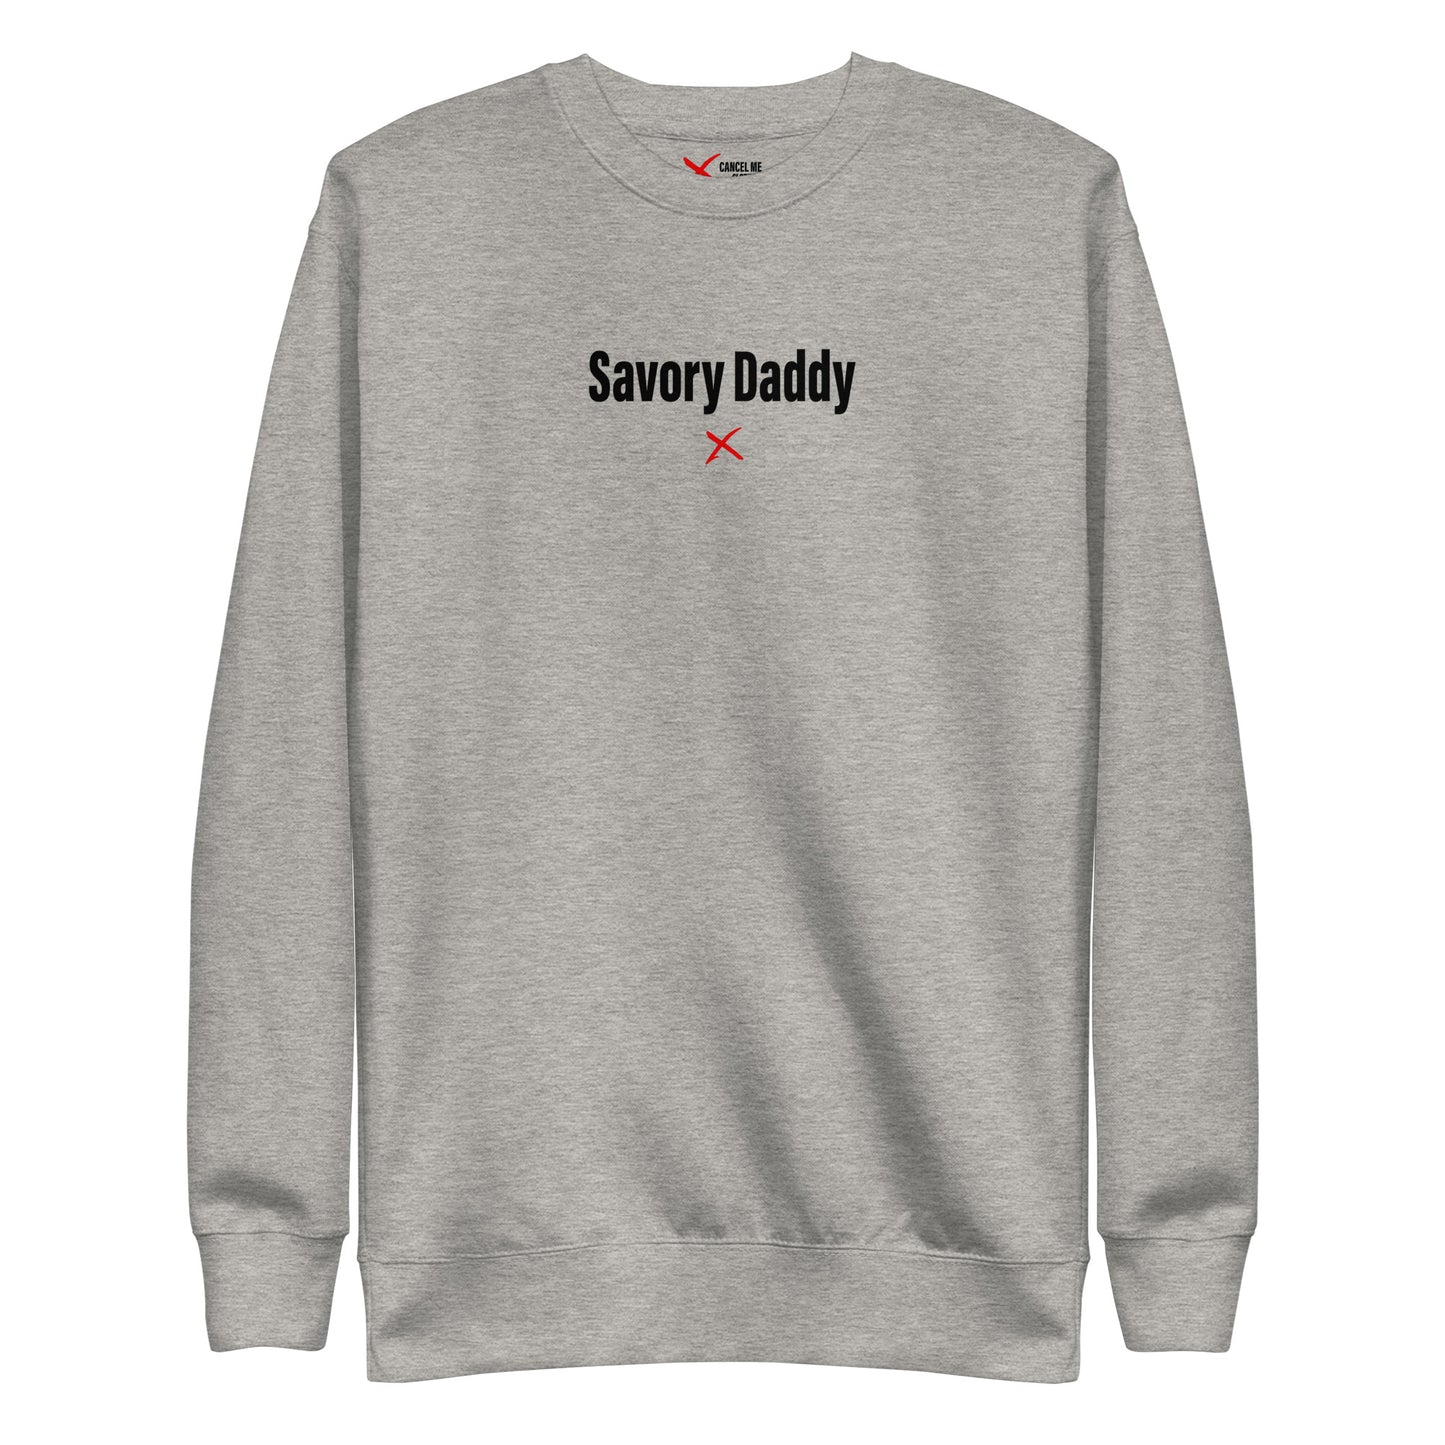 Savory Daddy - Sweatshirt